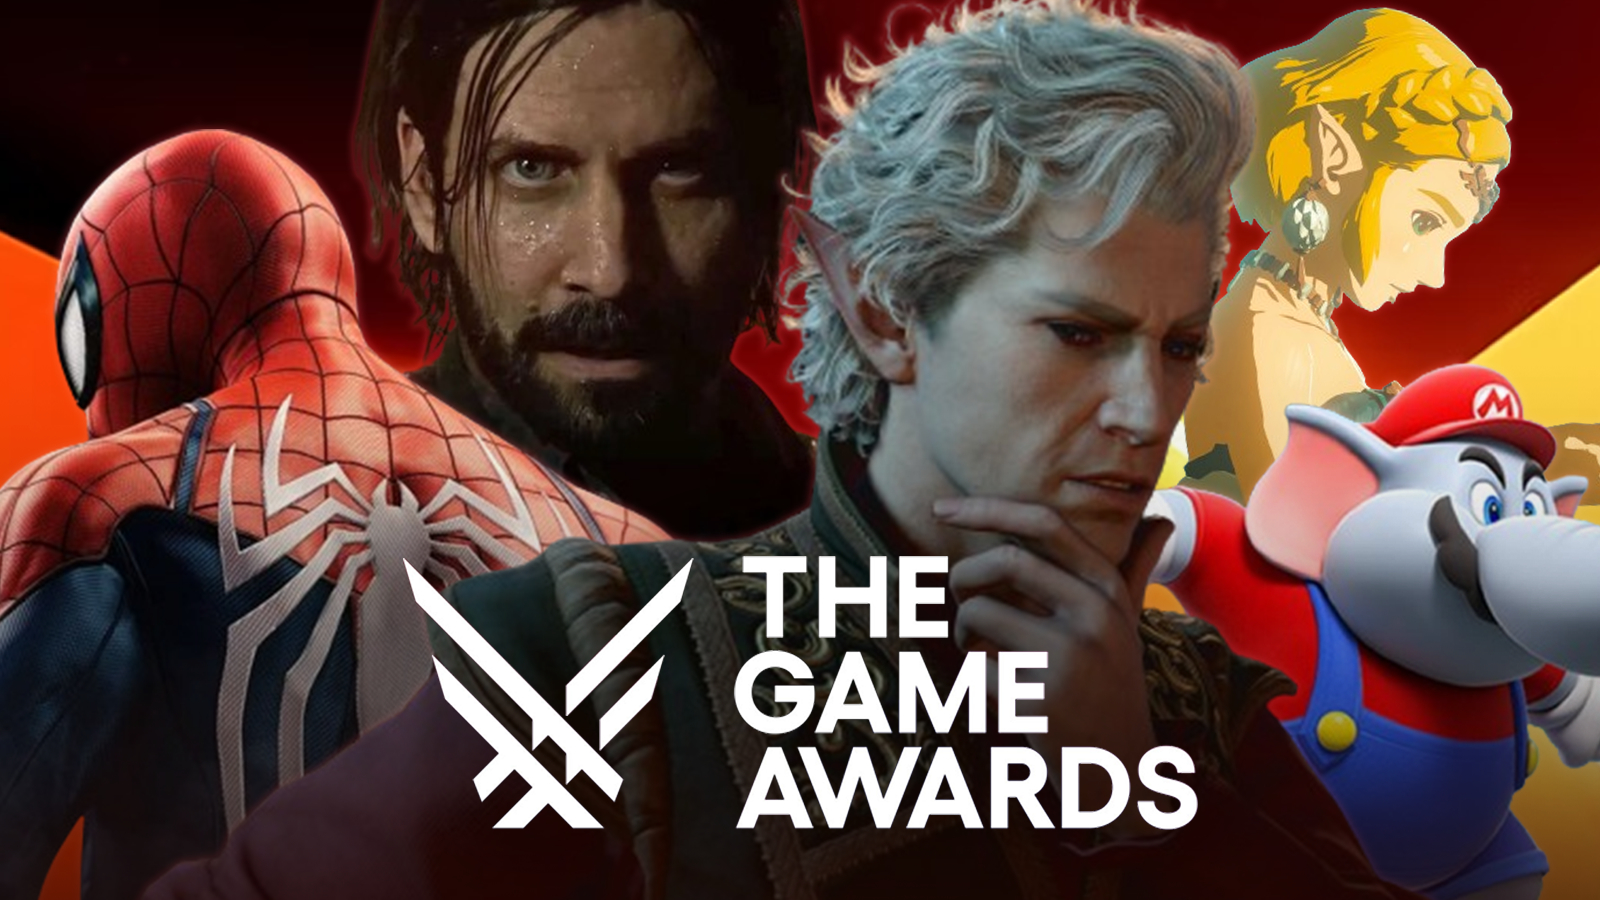 Baldur's Gate 3, Alan Wake 2 And Every Winner At The Game Awards